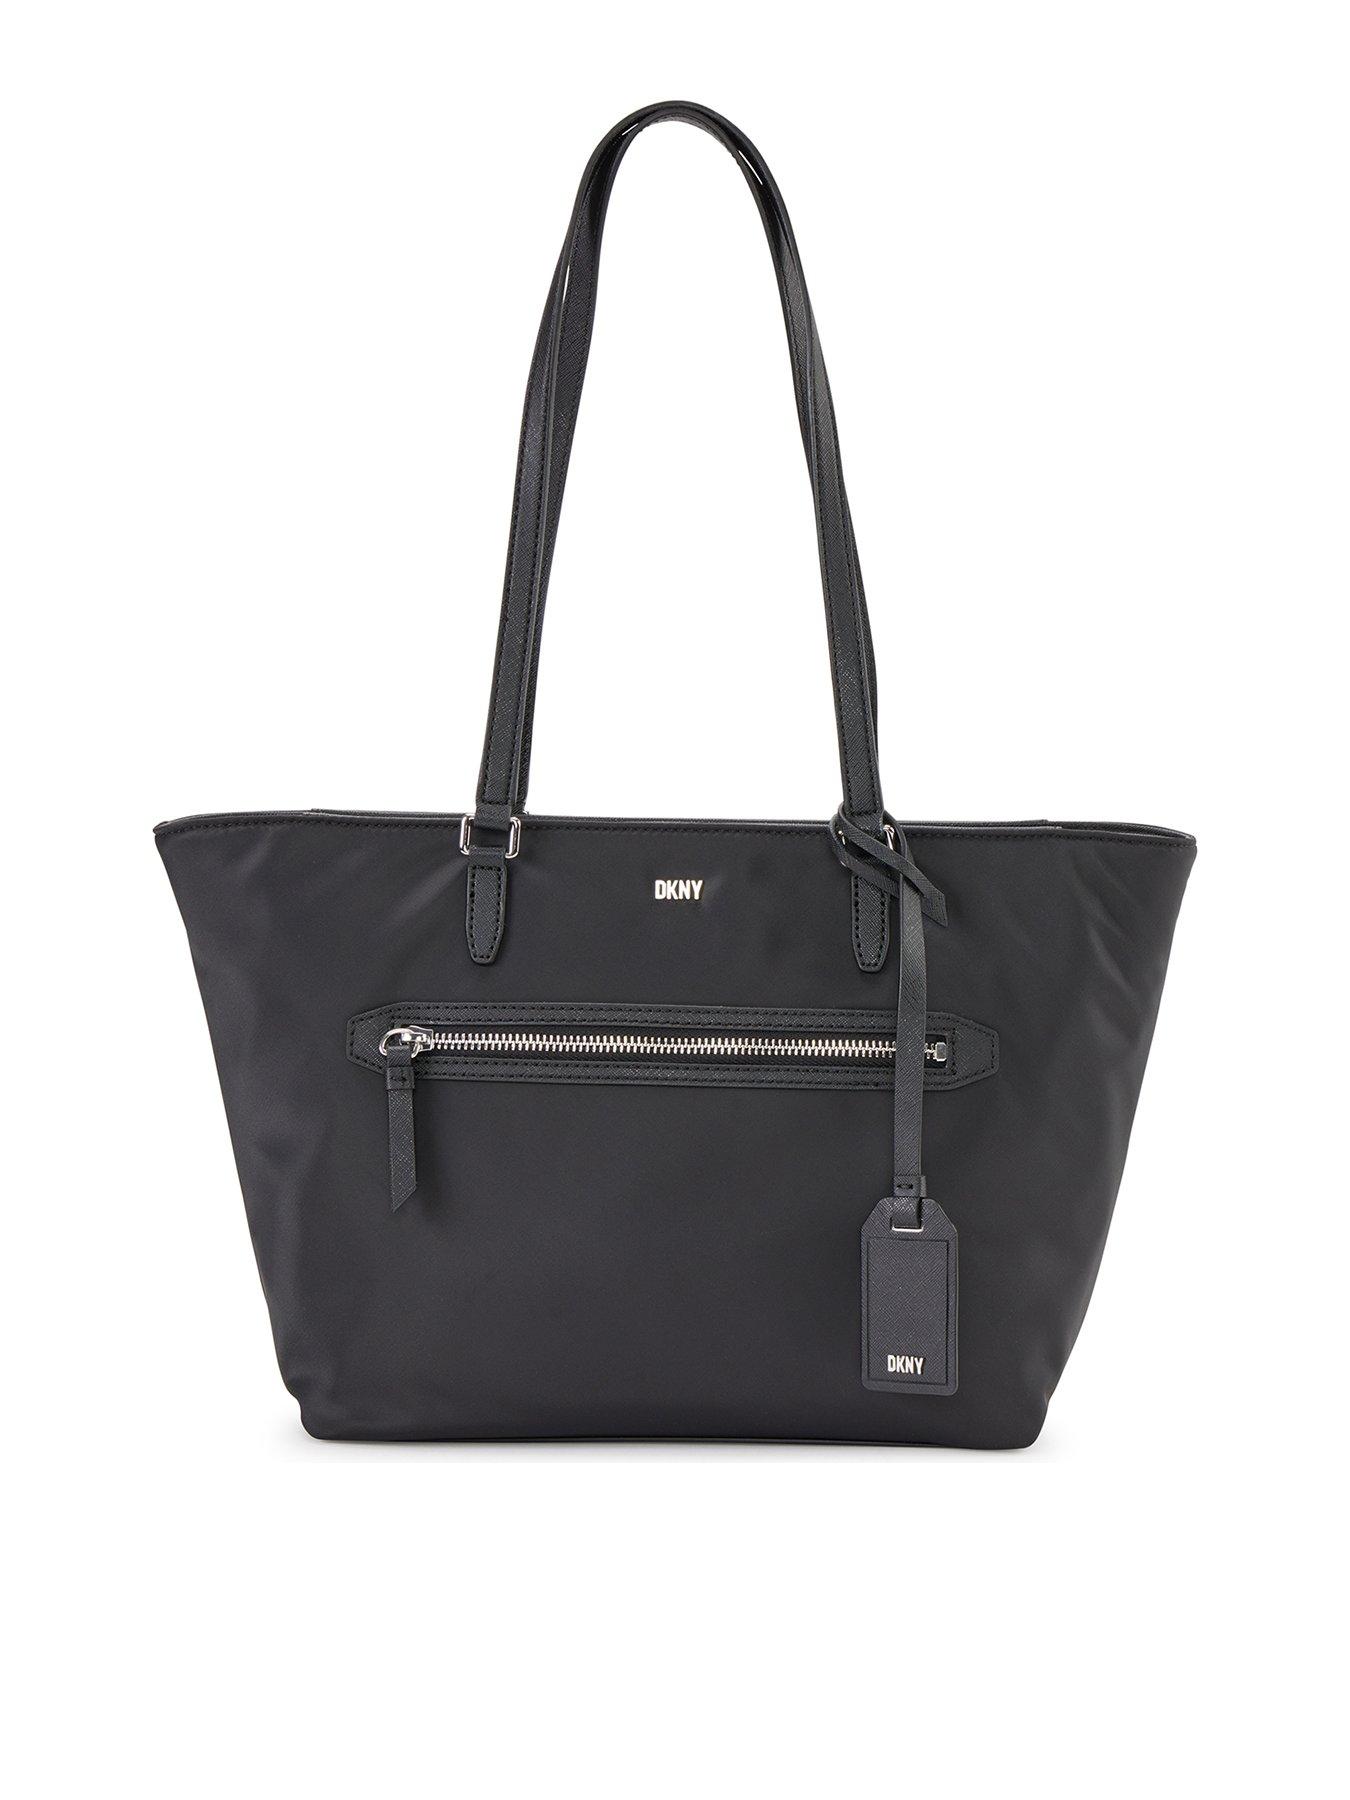 DKNY ladies large black studded monogrammed fabric purse | eBay